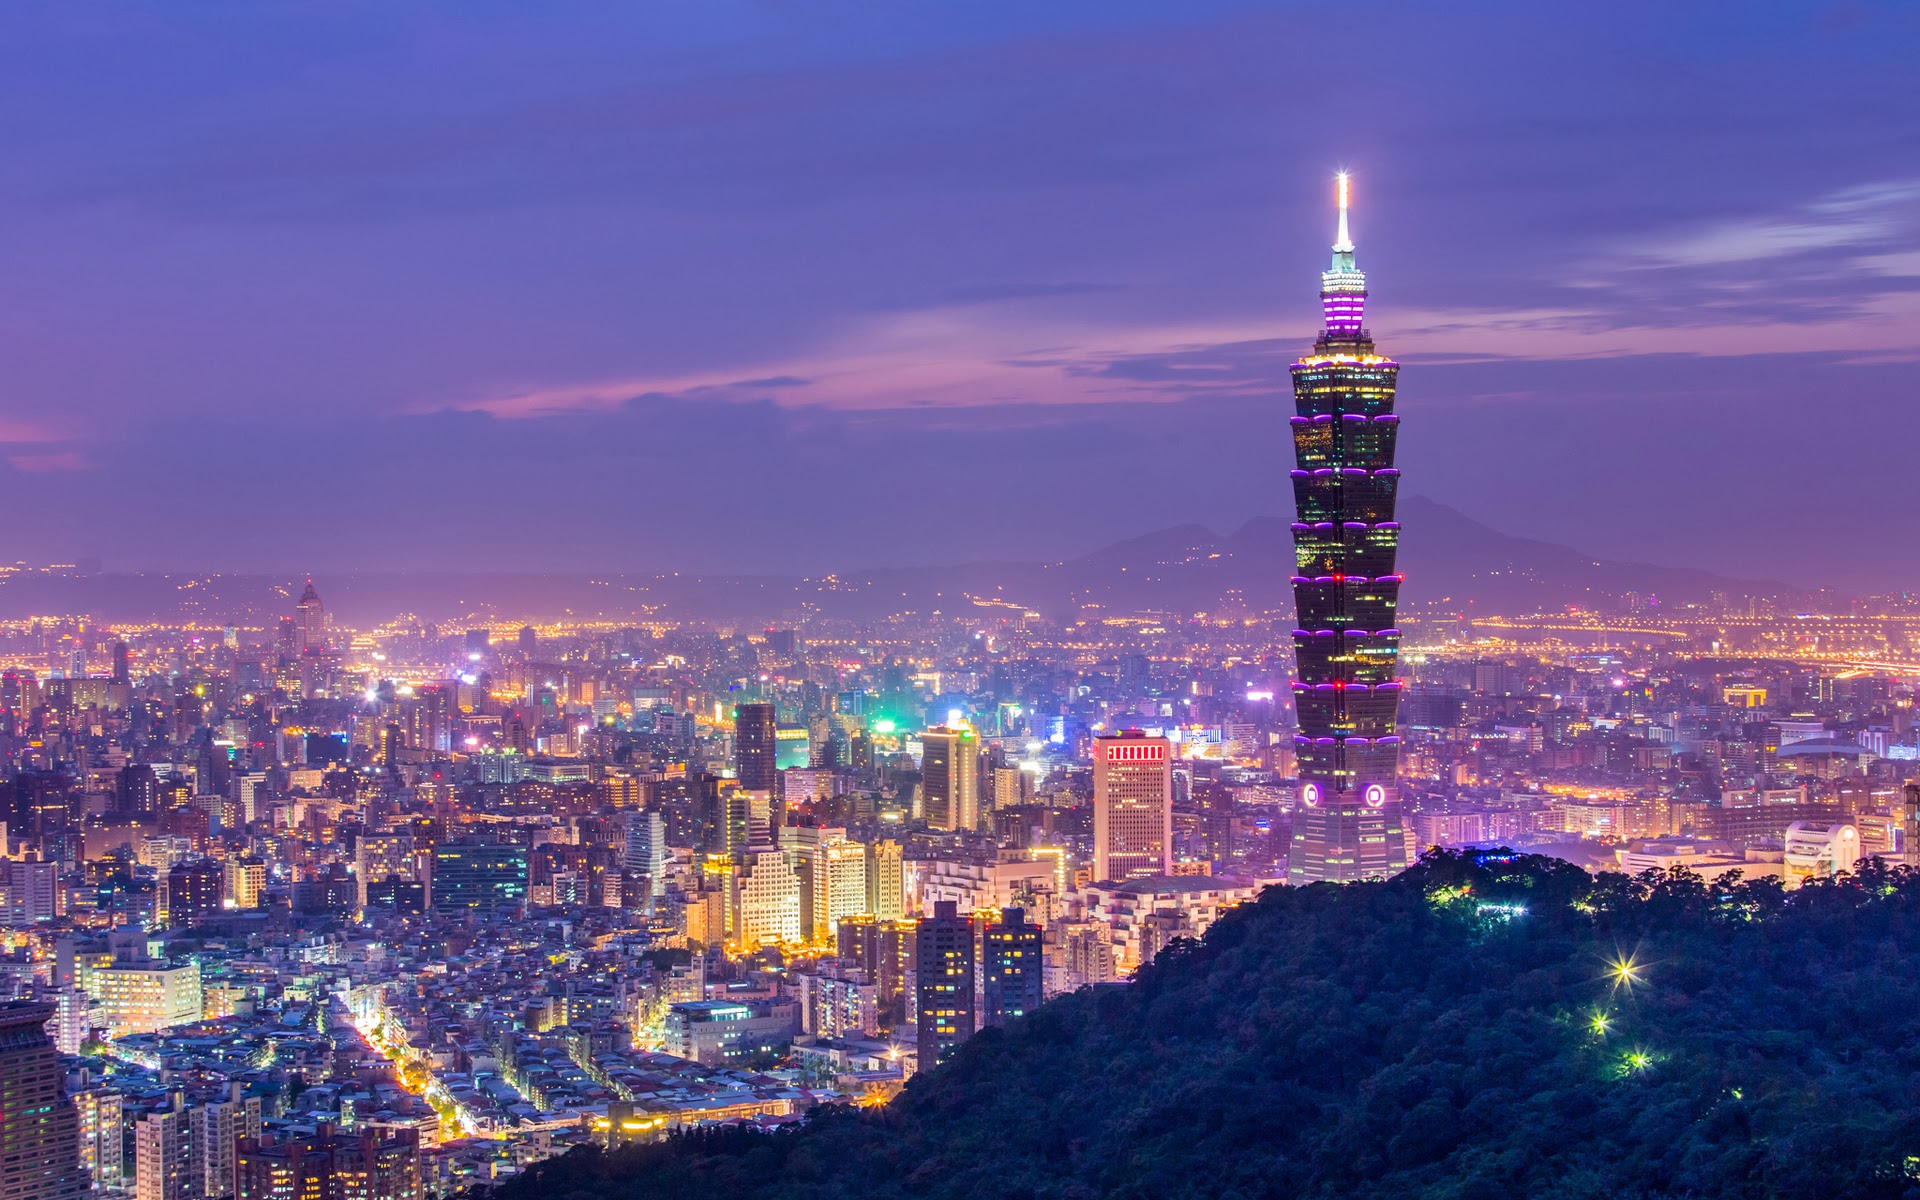 Taipei 101 City View Wallpaper - HD Wallpapers